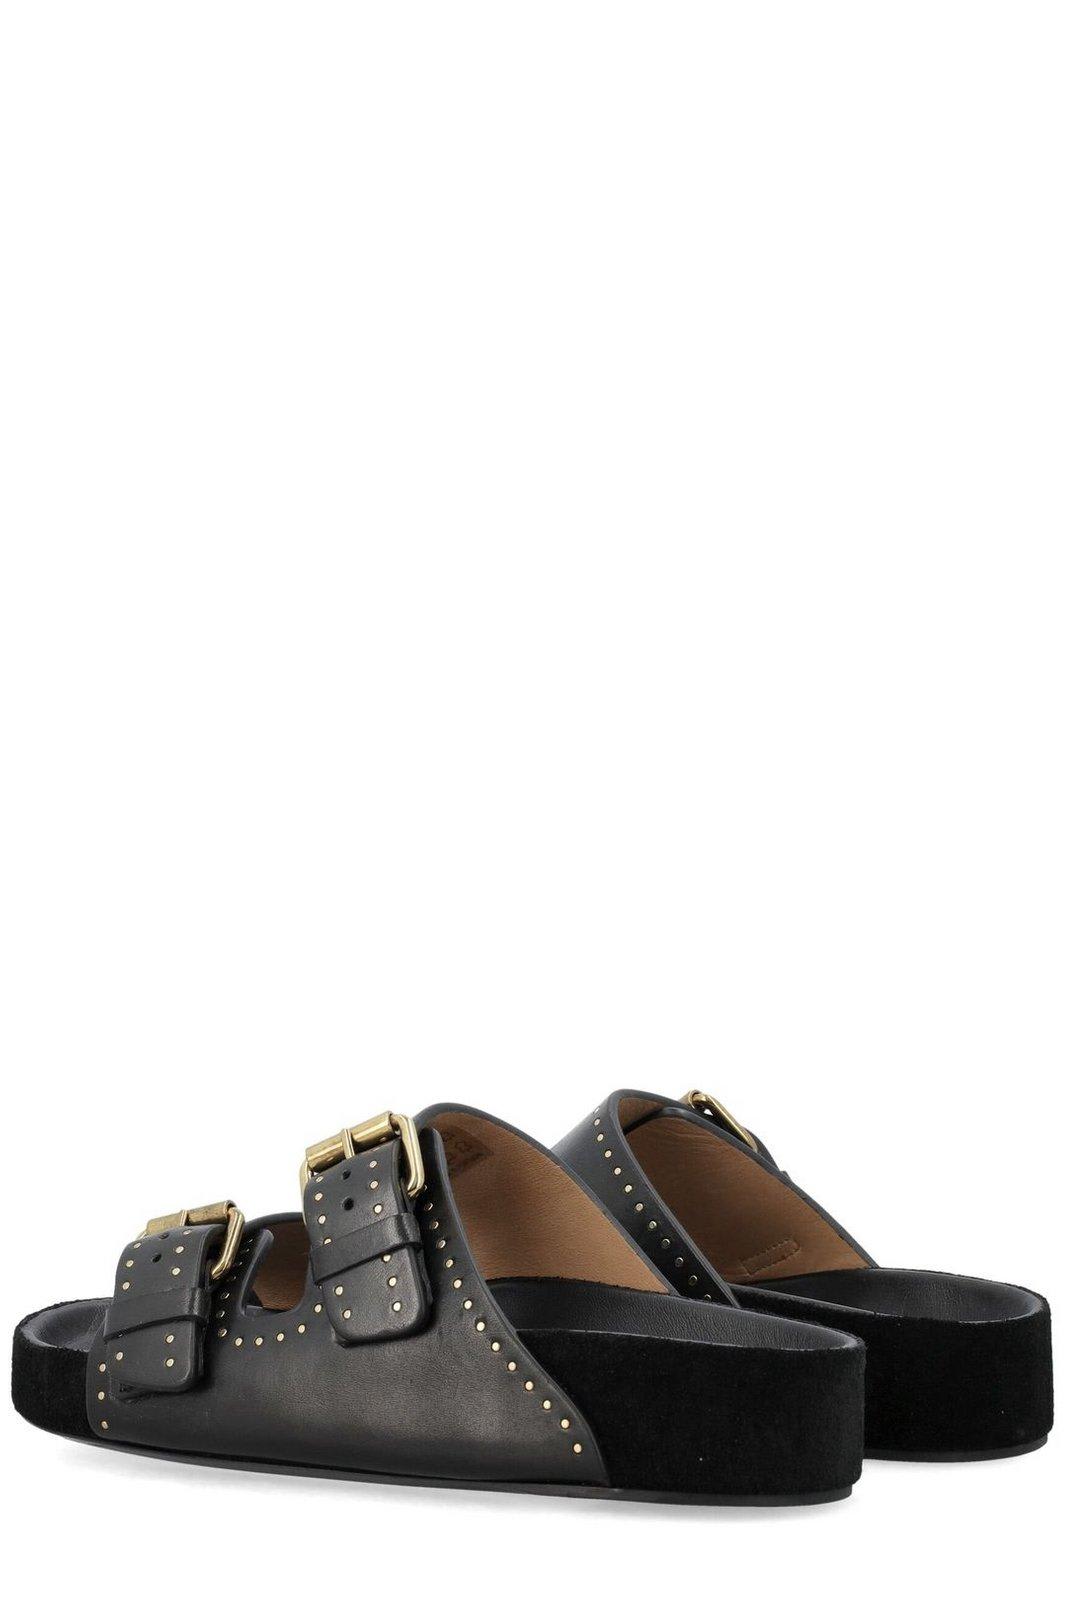 Shop Isabel Marant Lennyo Buckle-fastened Sandals In Black